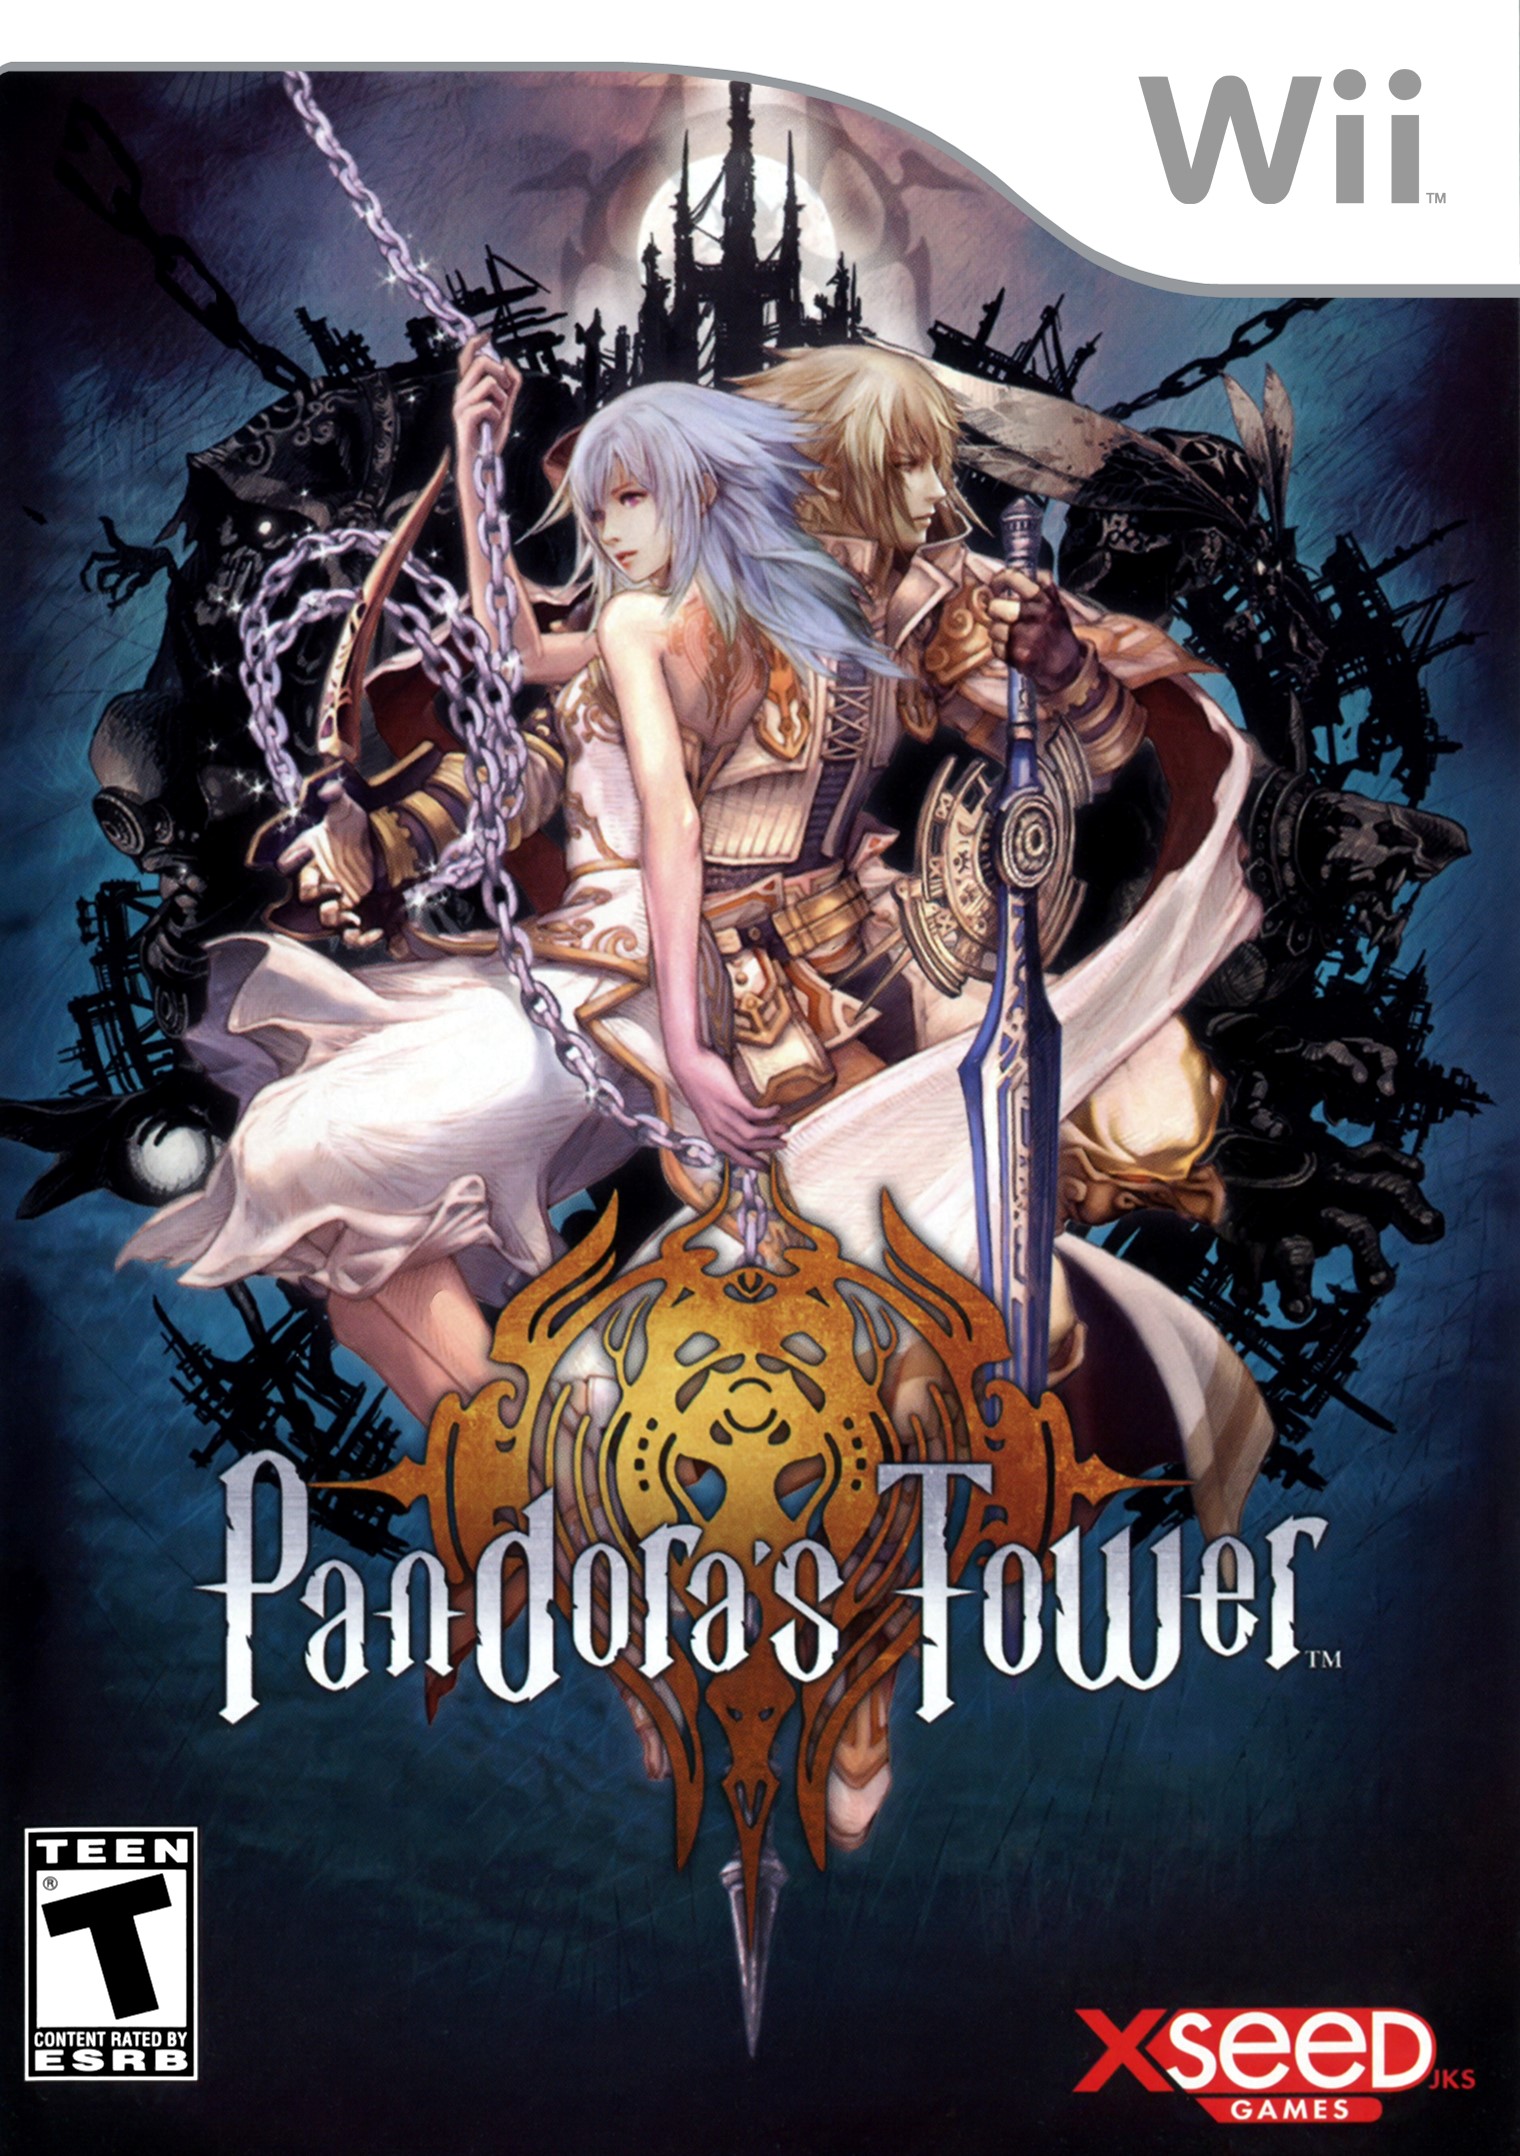 'Pandora's Tower'